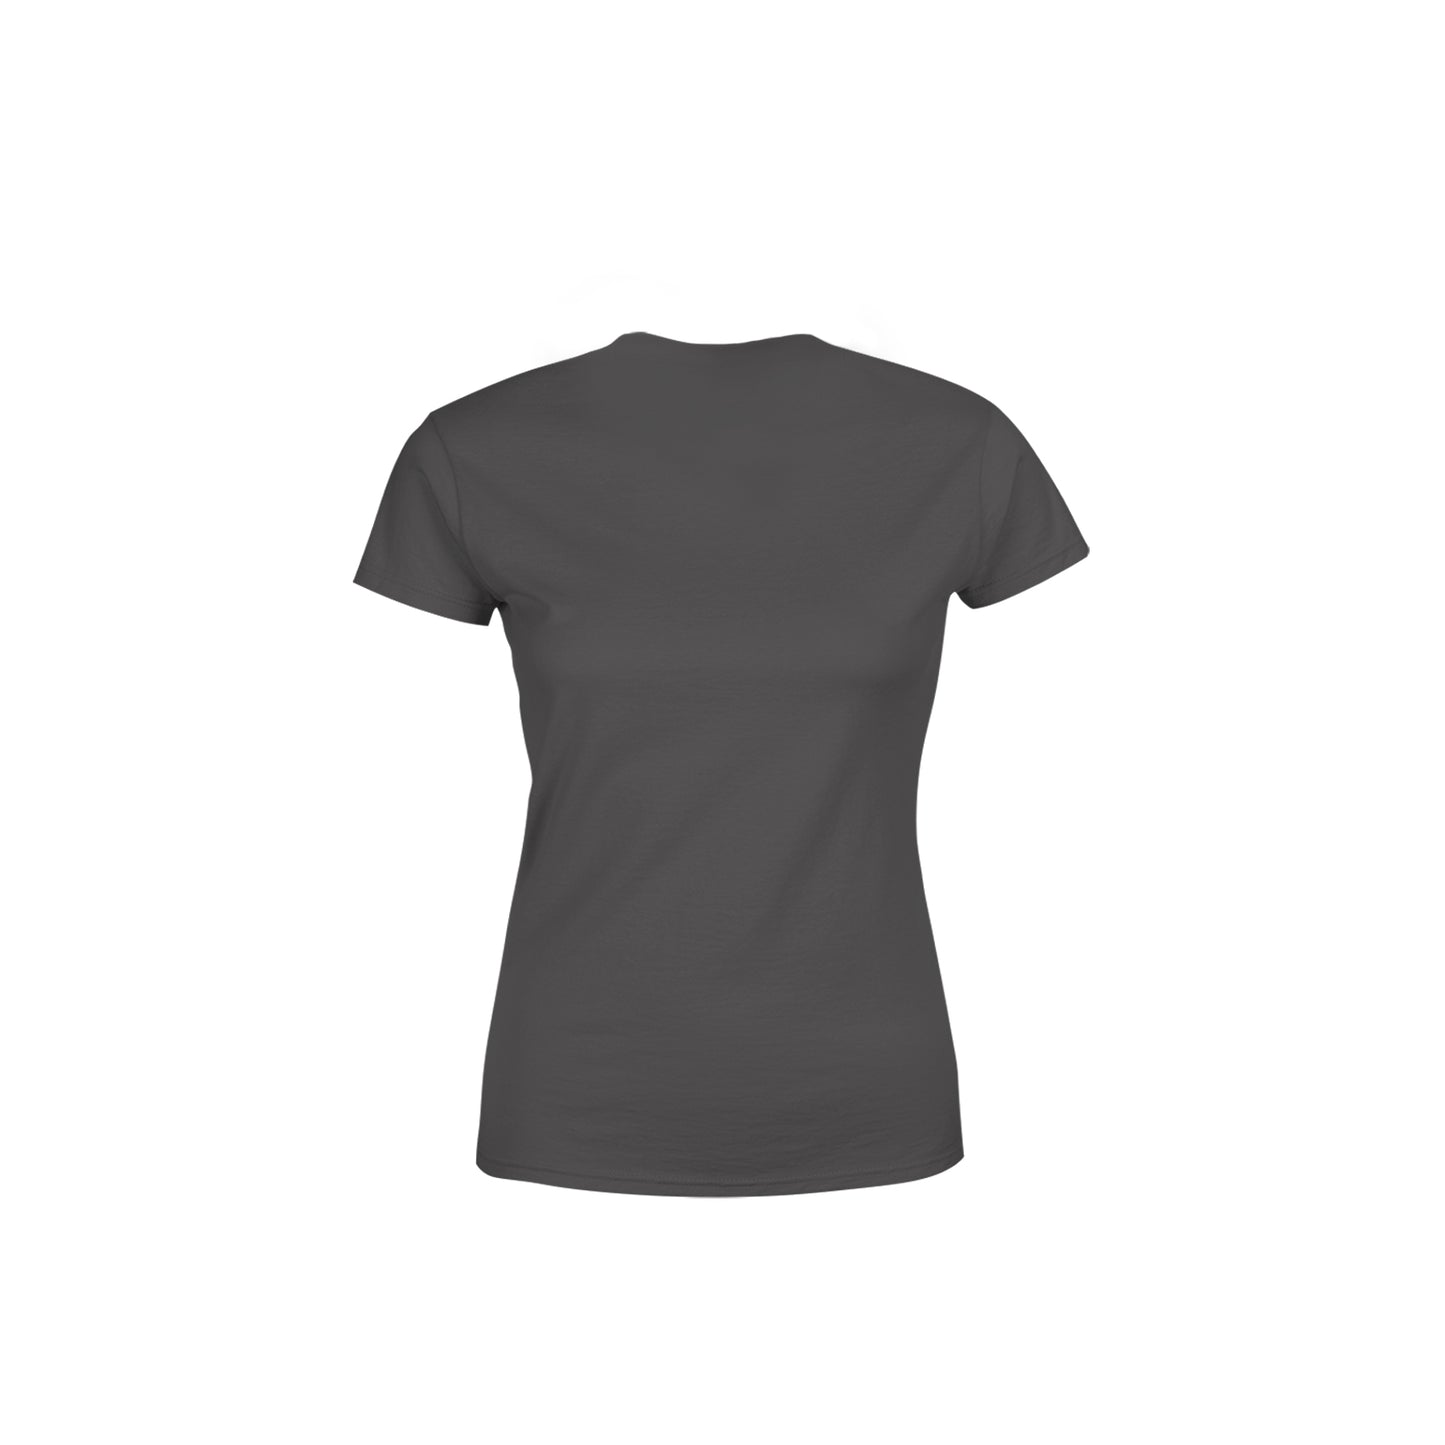 37 Number Women's T-Shirt (Charcoal Grey)